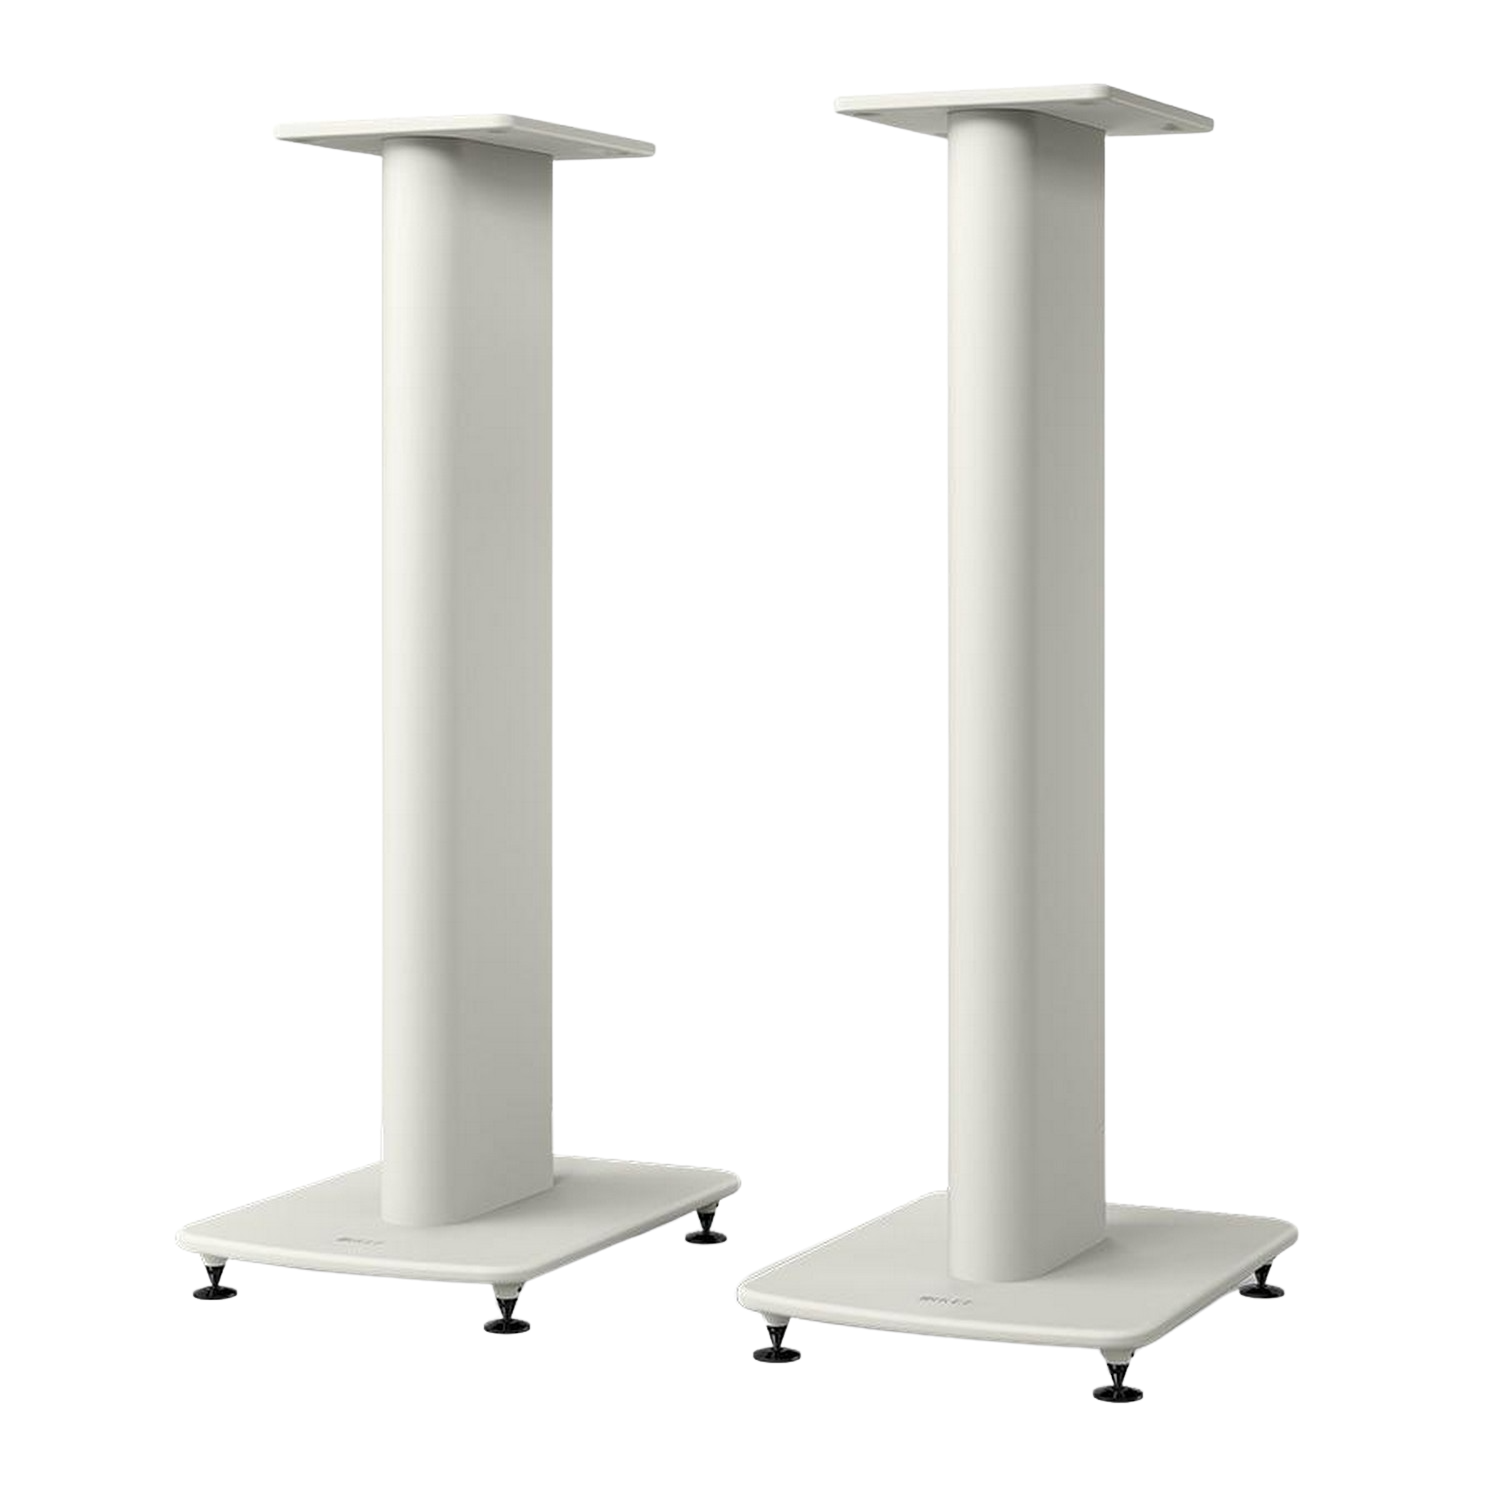 Kef Soporte Altavoz s2 blanco mineral performance stand altavoces floorstand pareja ls50 meta y wireless